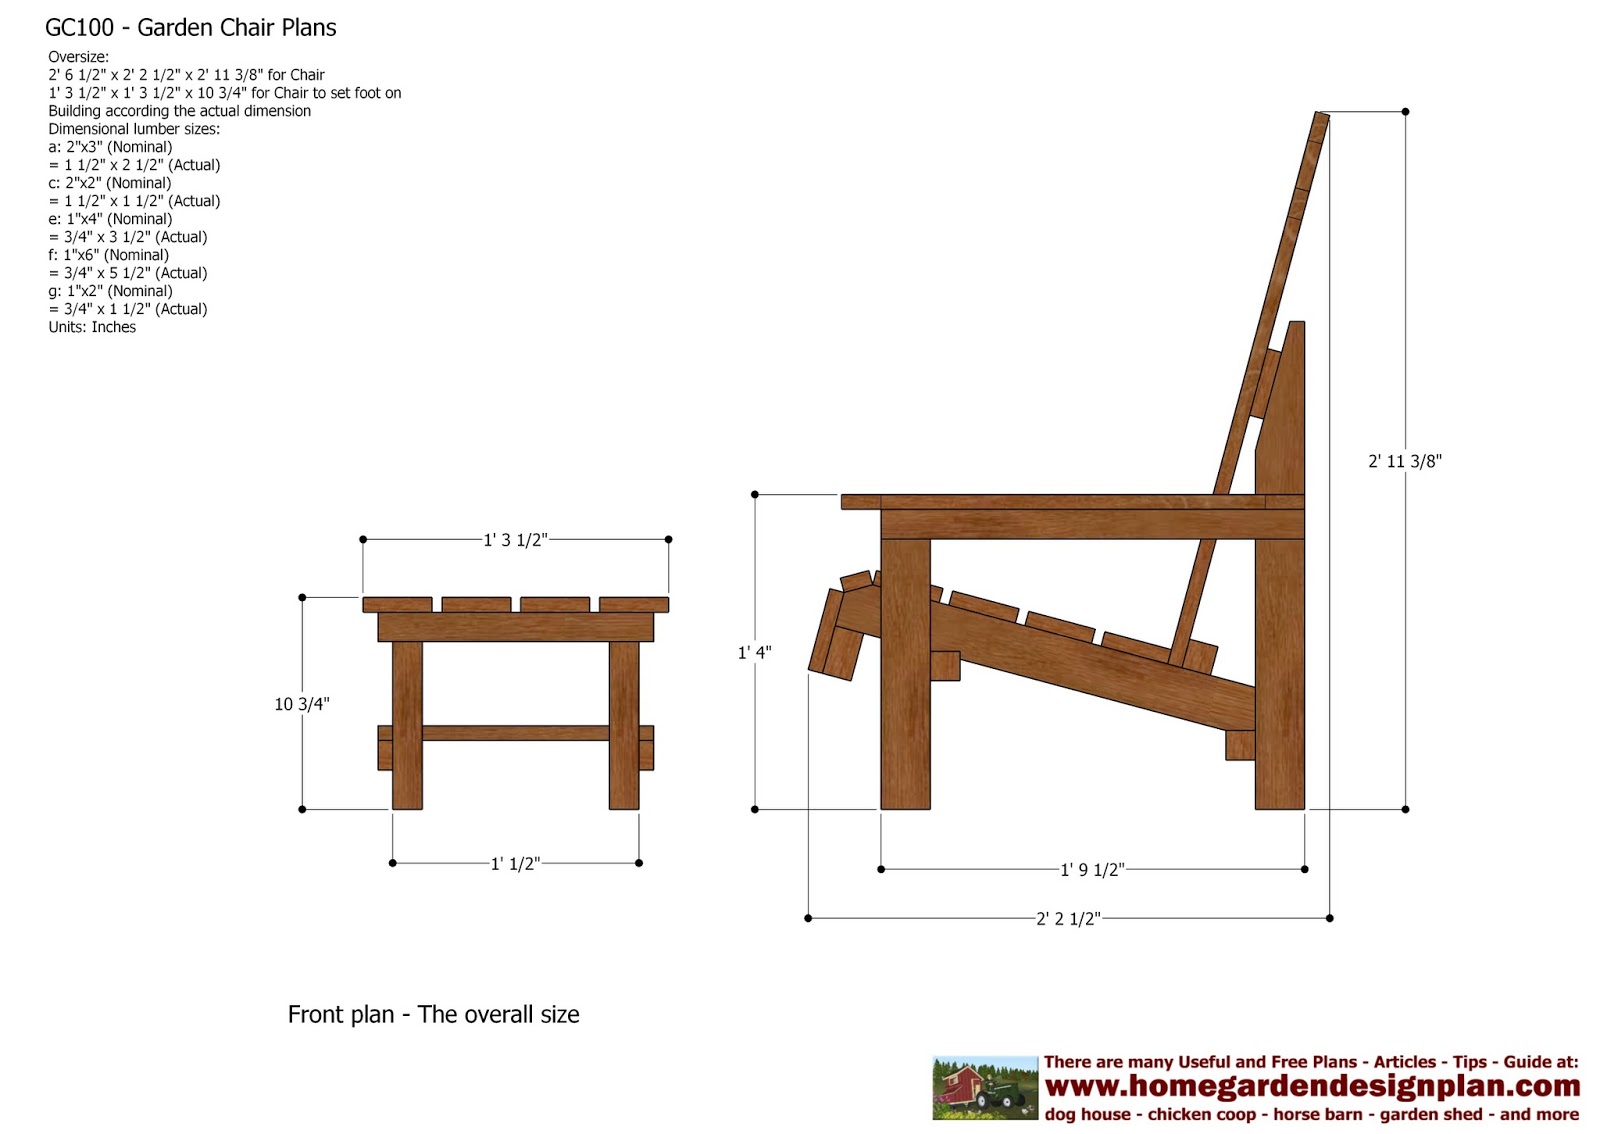 ... - Garden Chair Plans - Out Door Furniture Plans - Woodworking Plans